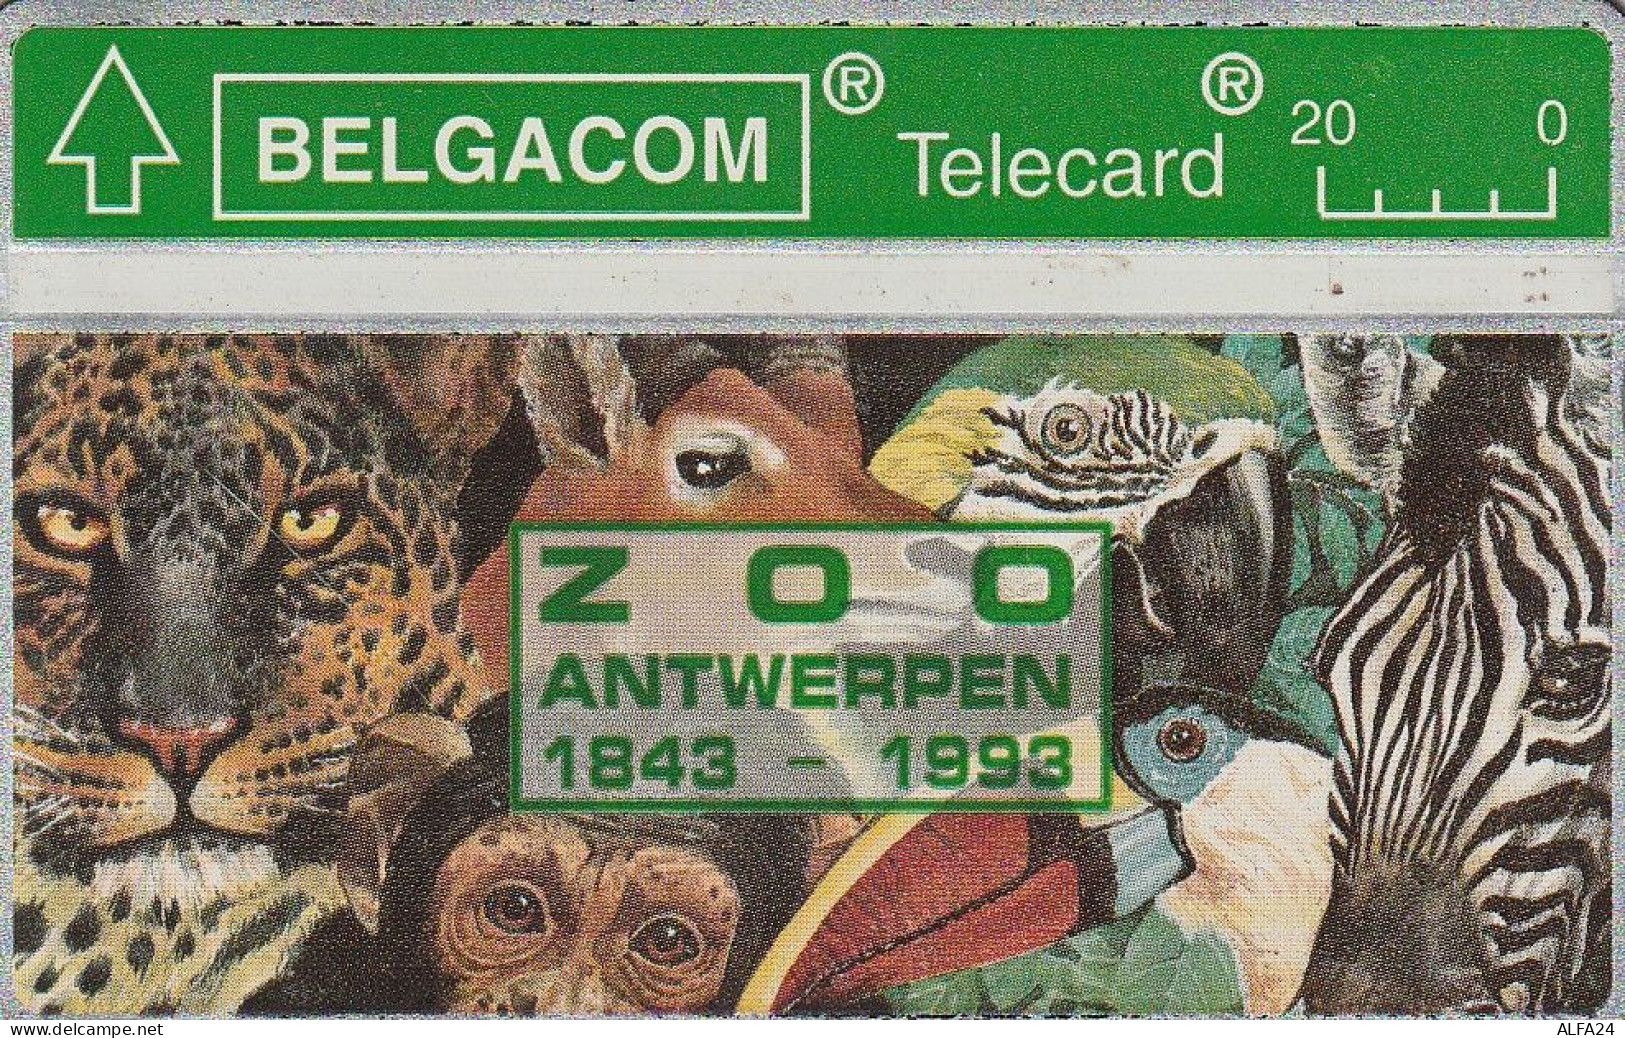 PHONE CARD BELGIO LG (CV6615 - Senza Chip